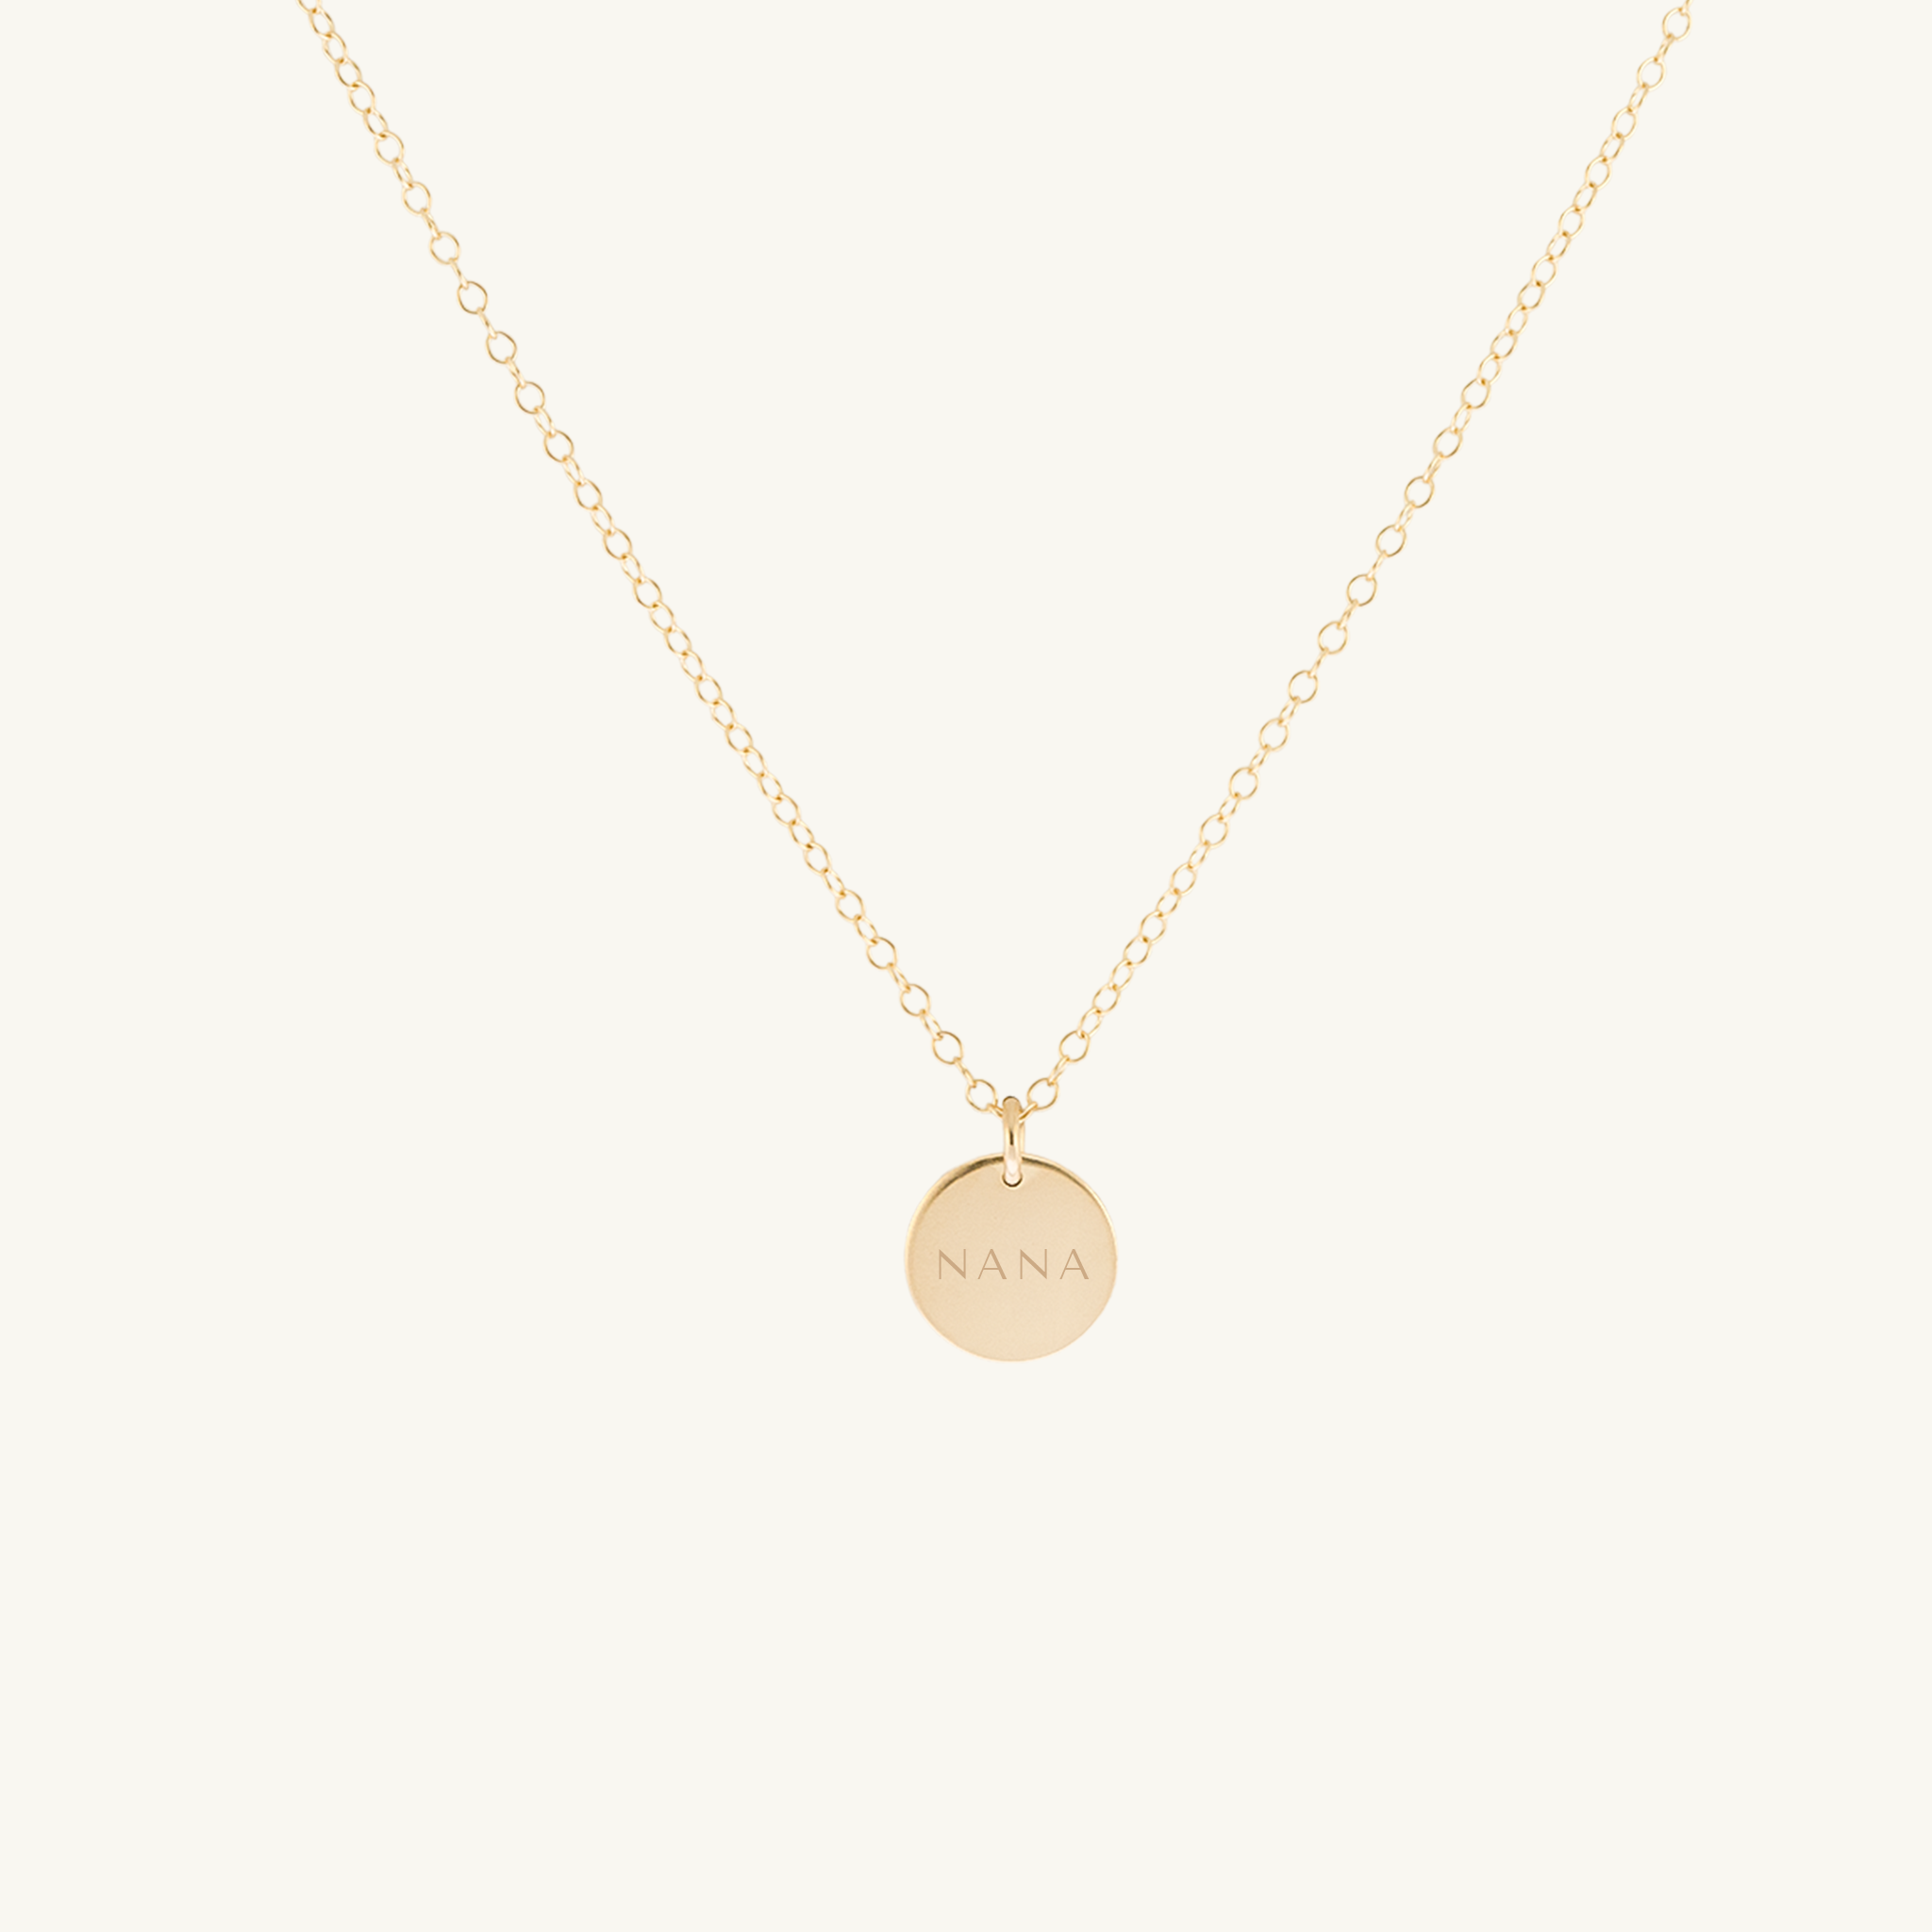 Sarah Cameron Jewelry Nana Coin Necklace 14k Gold Filled